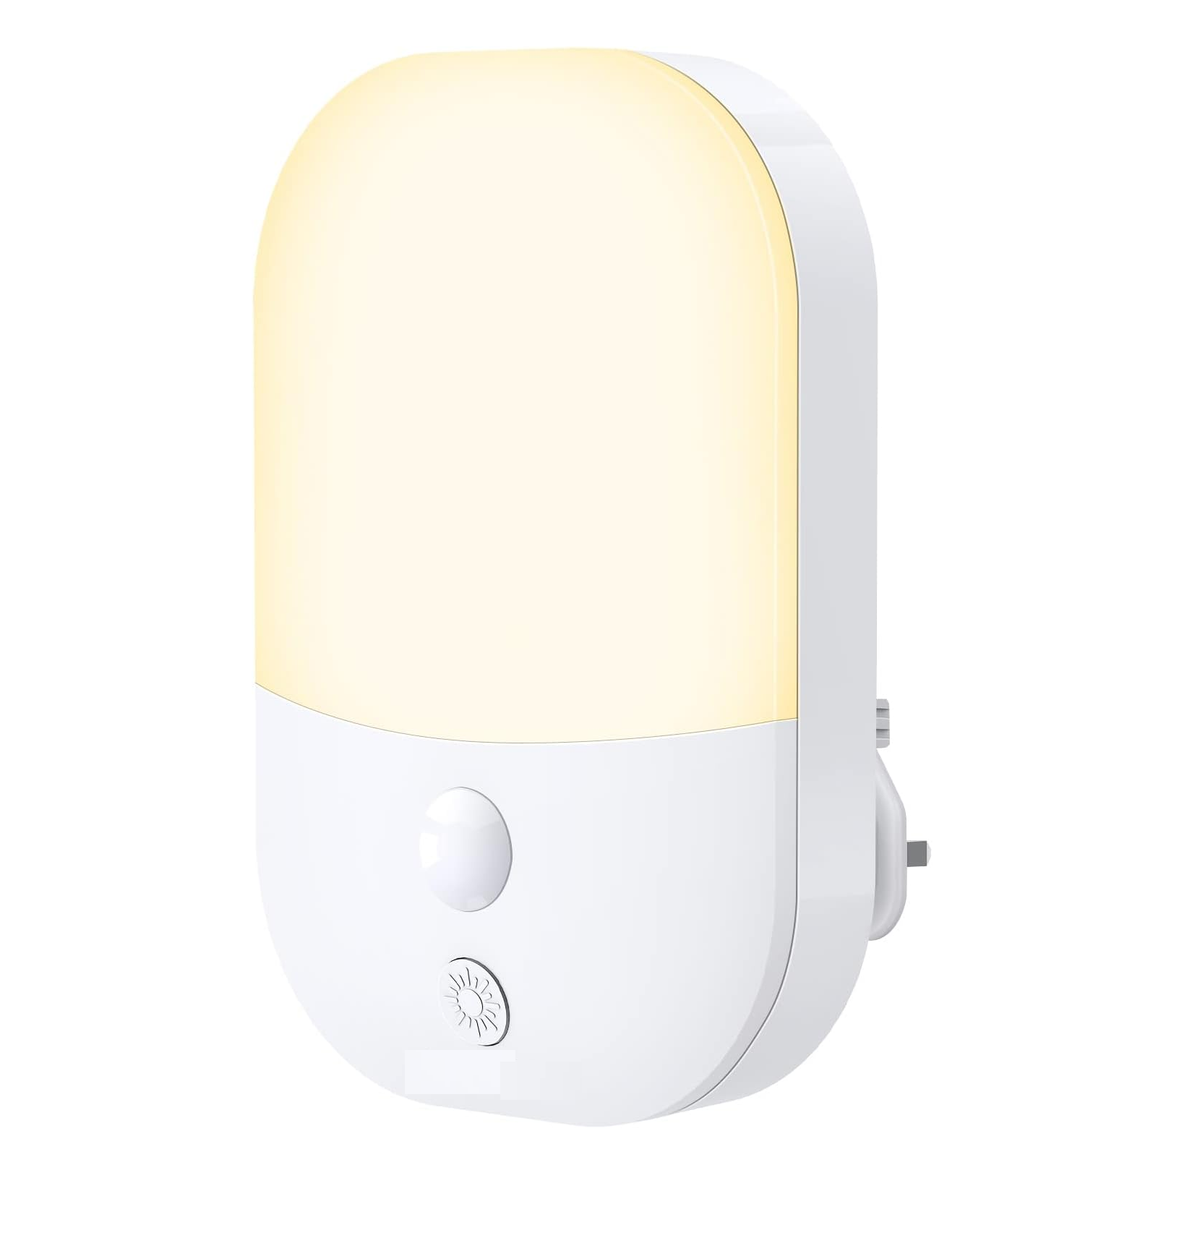 LED Night Light Plug in Walls with Dusk to Dawn Photocell Sensor, & Brightness Adjustable 2700K Warm White Lamp,  Auto Sensor Night Lighting